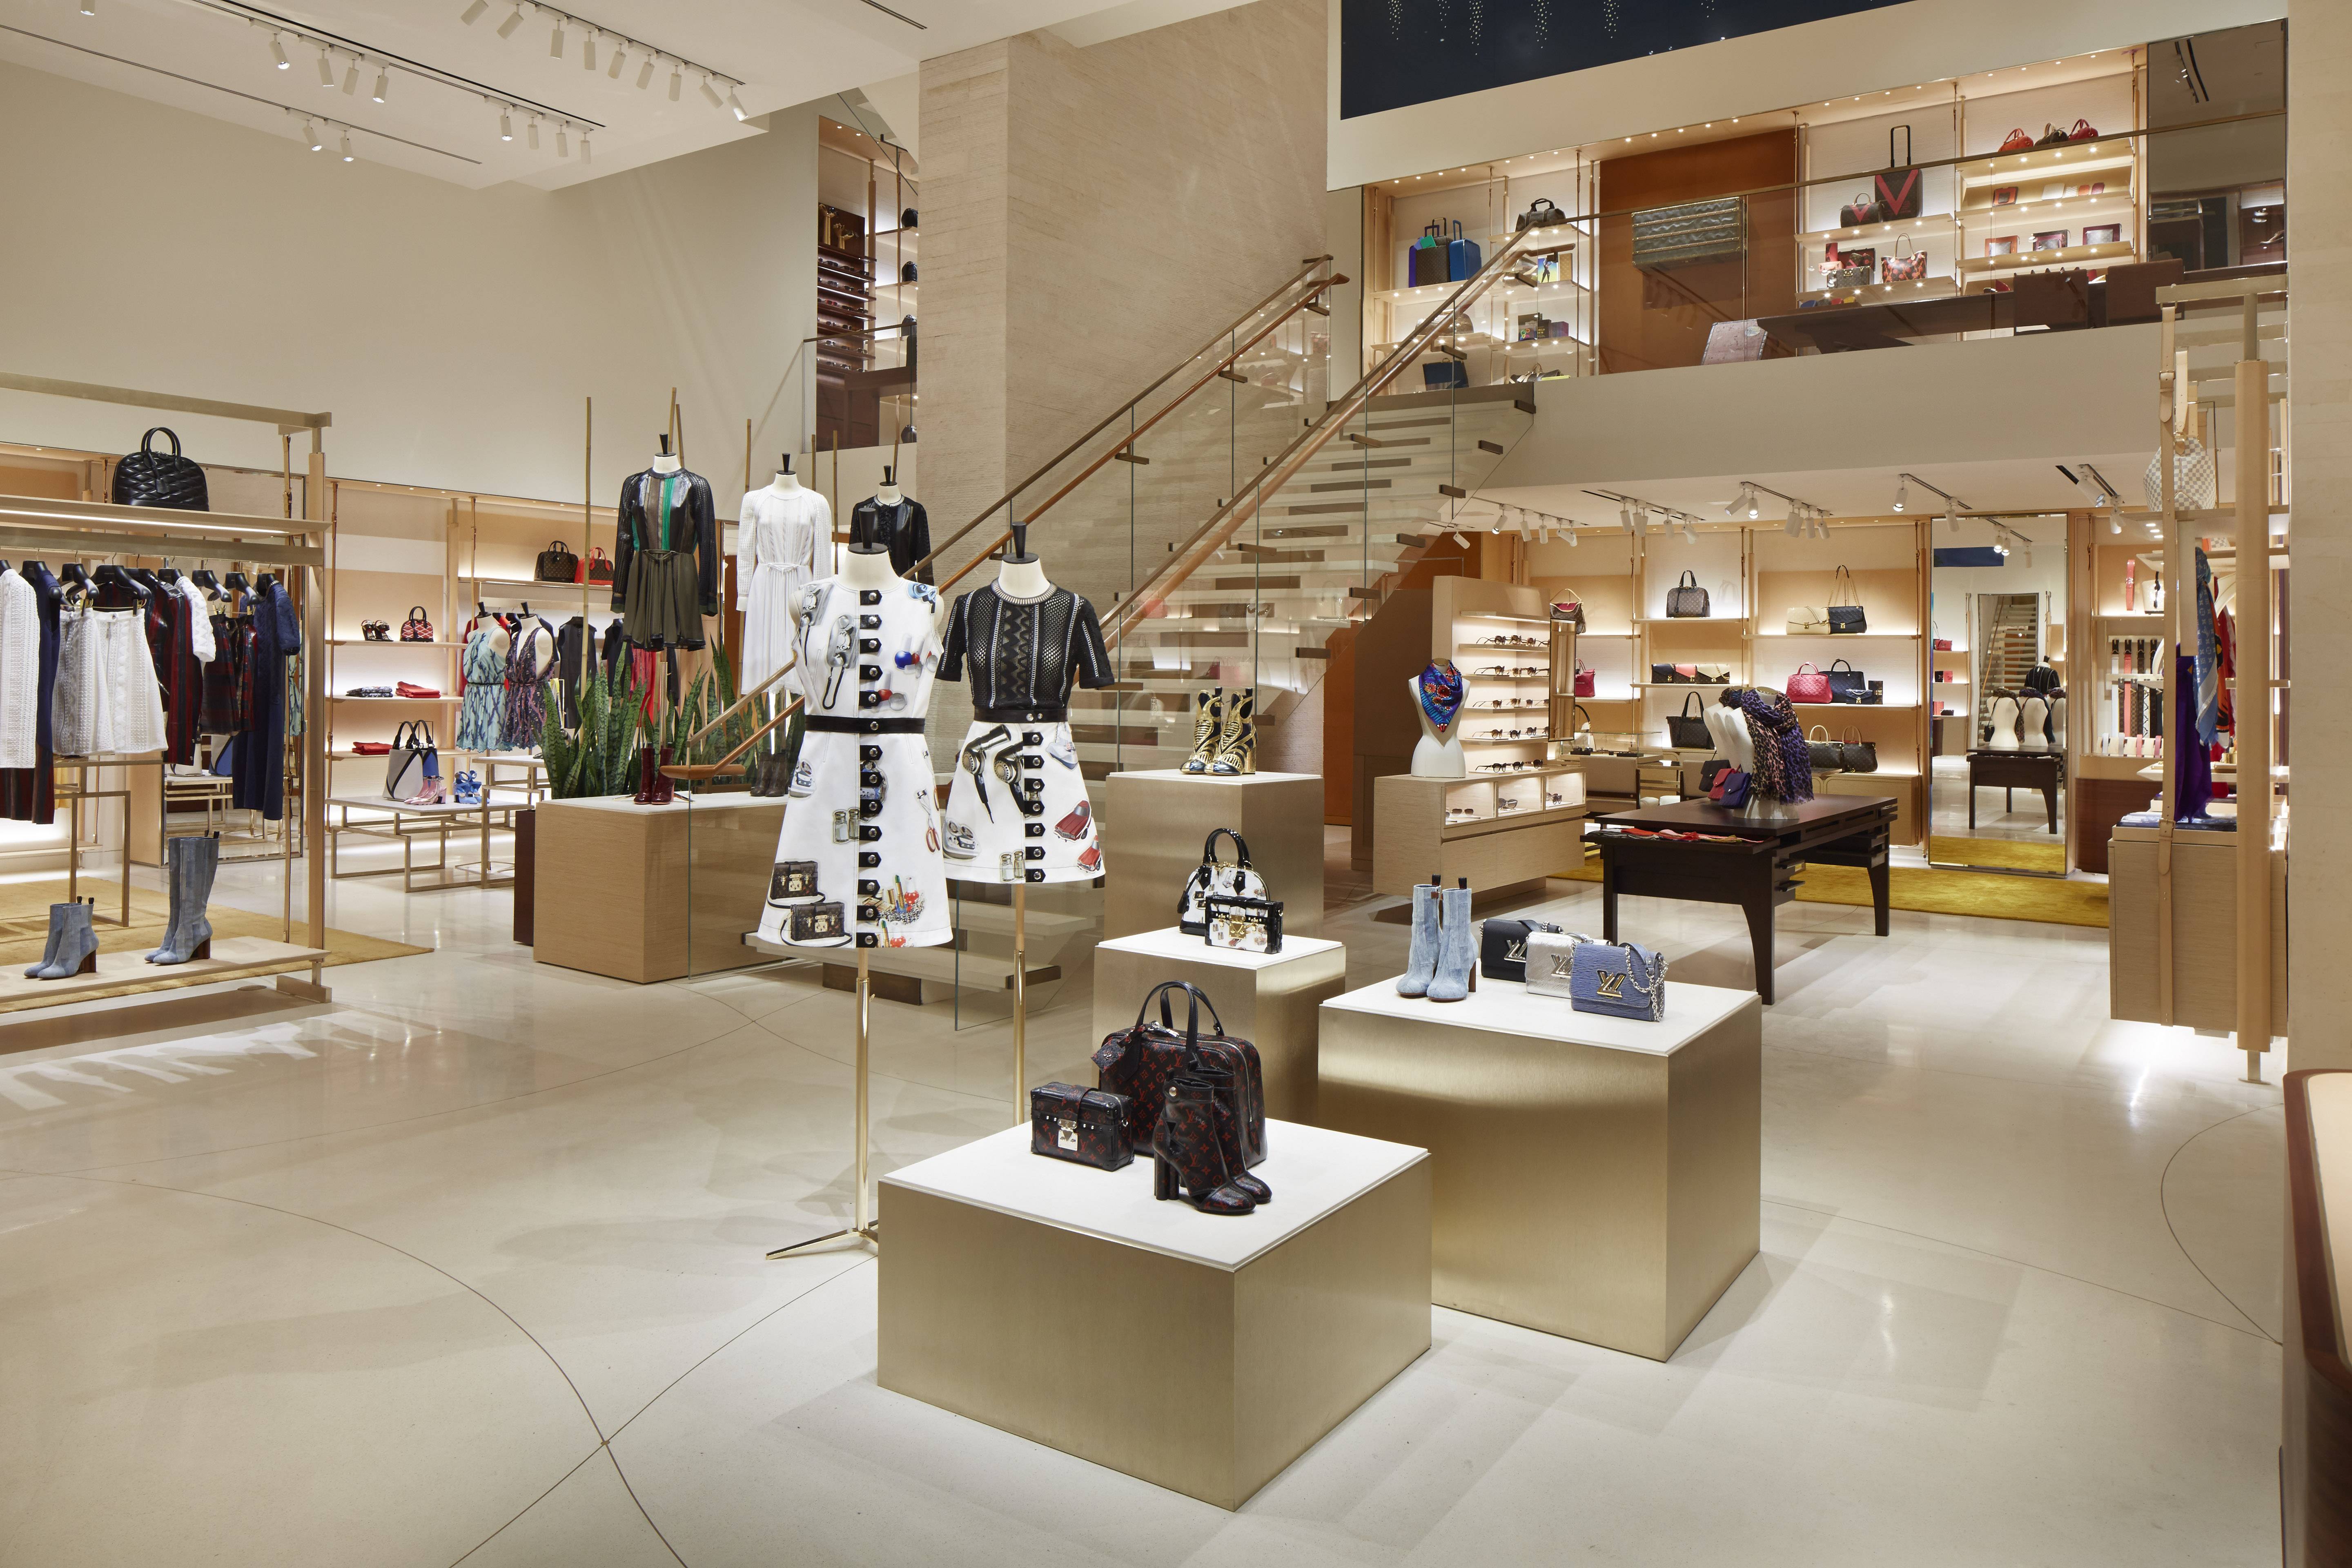 Louis Vuitton Shines Bright on The RealReal - Sheeba Magazine